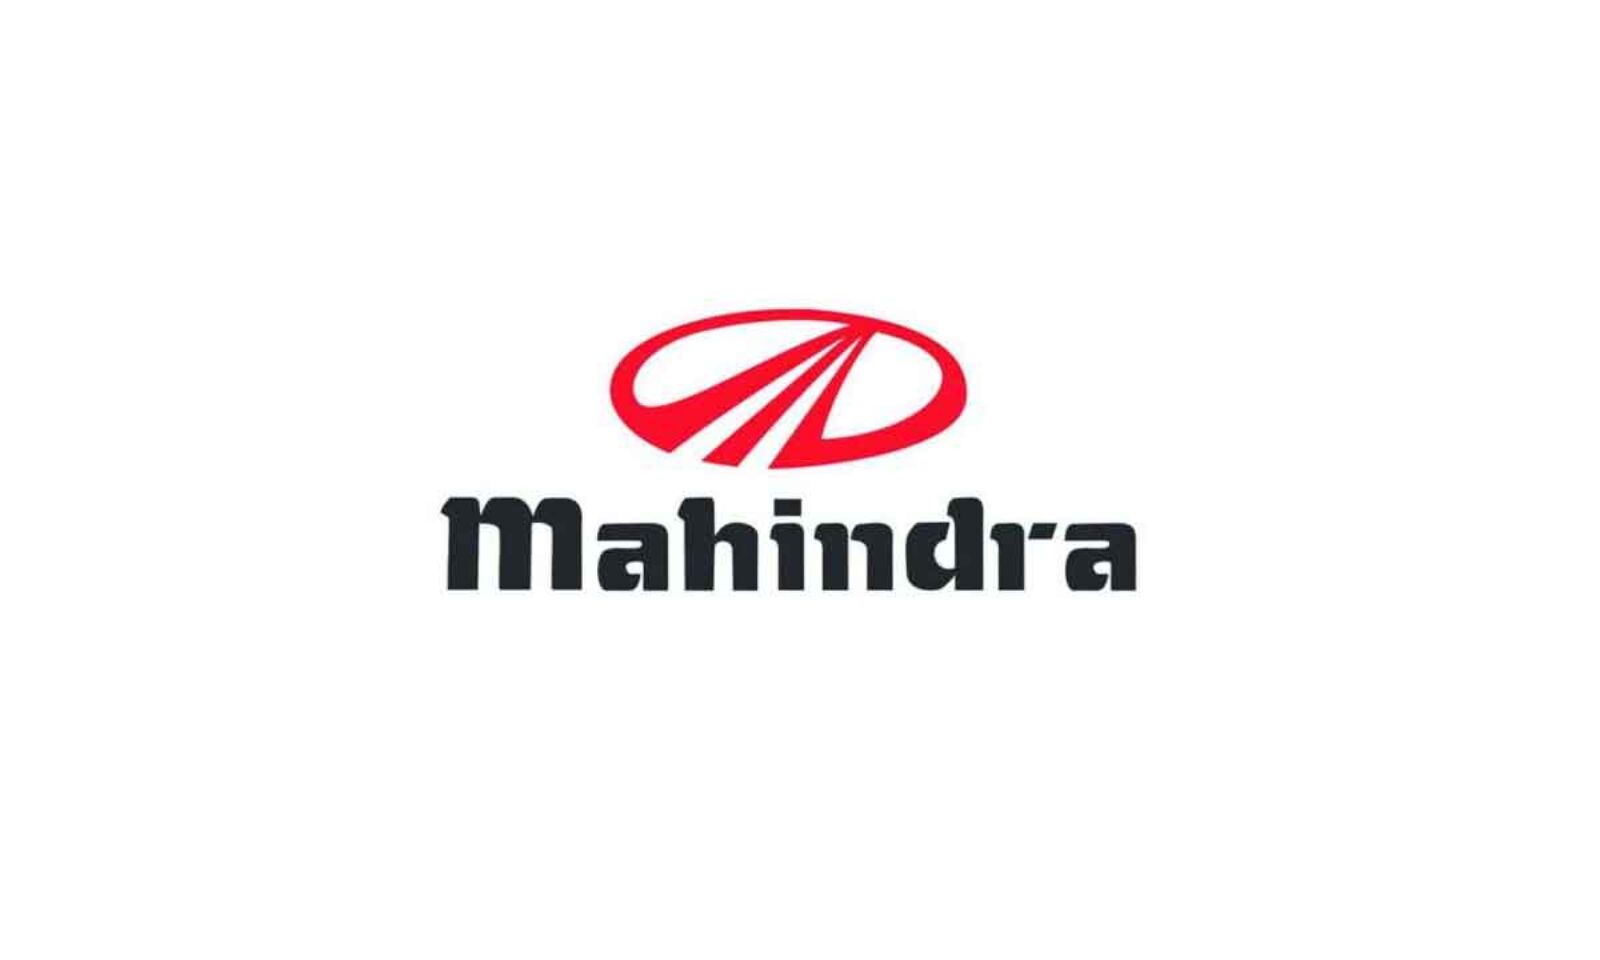 Mahindra logo | ? logo, Logos meaning, Logo wallpaper hd